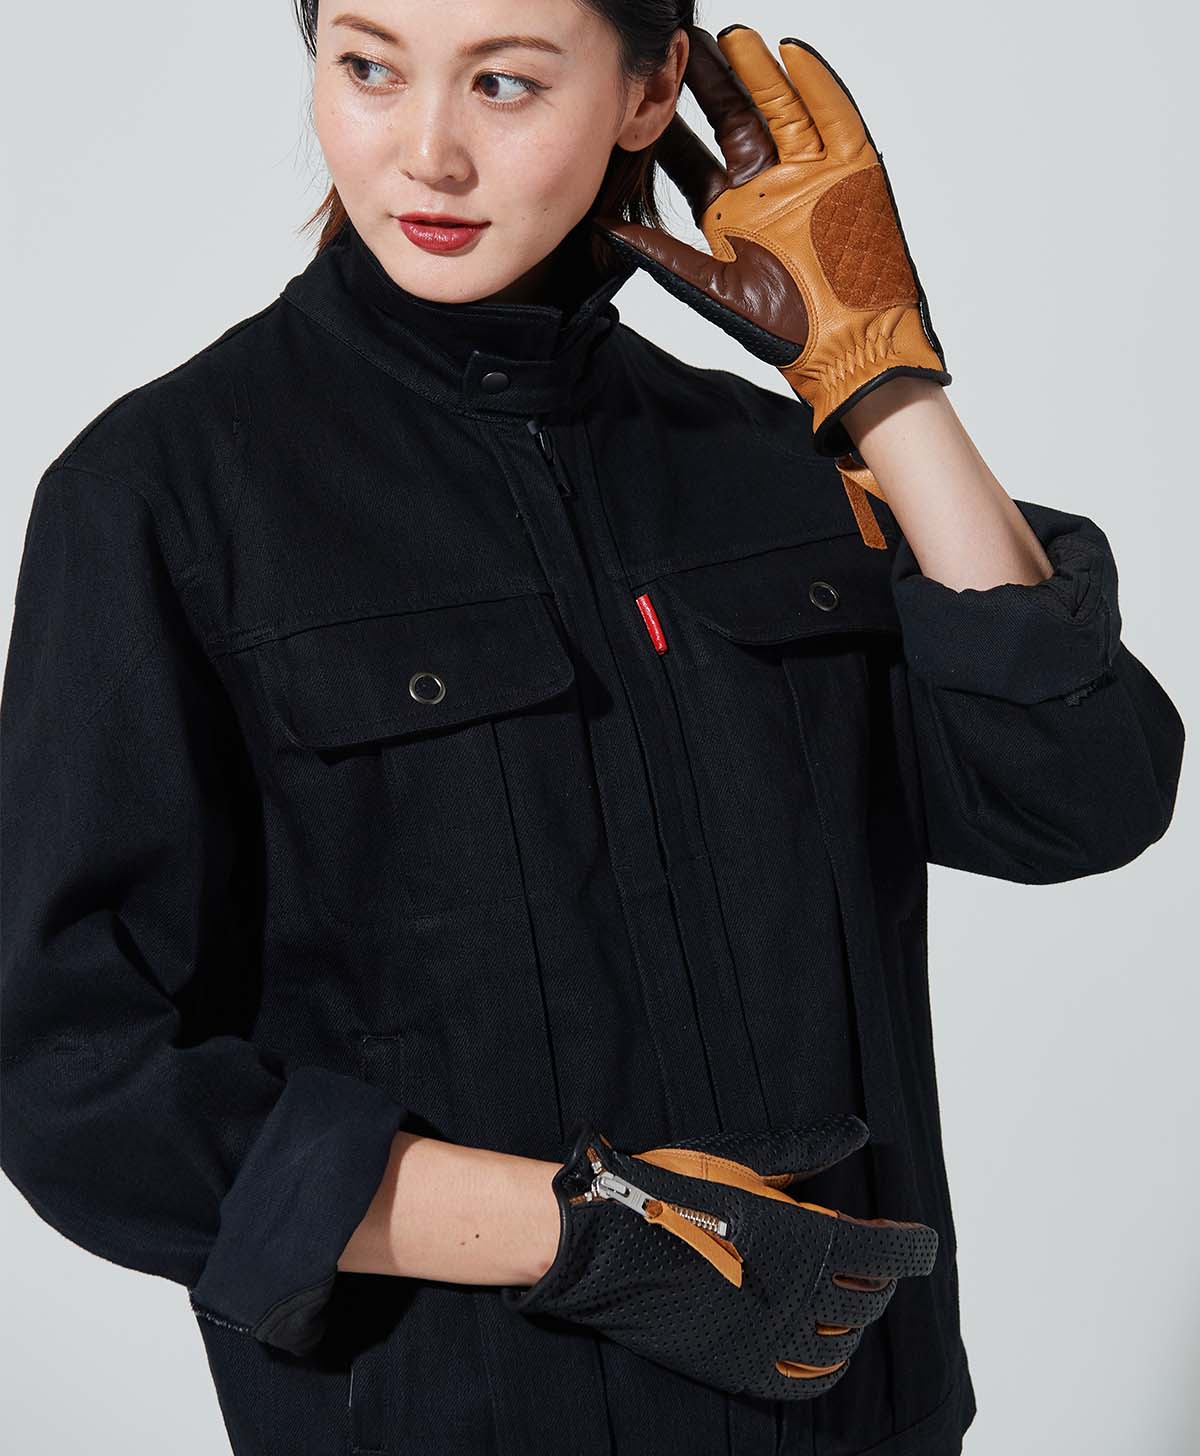 Rox Glove -Pl / Black / Brown (Women's)